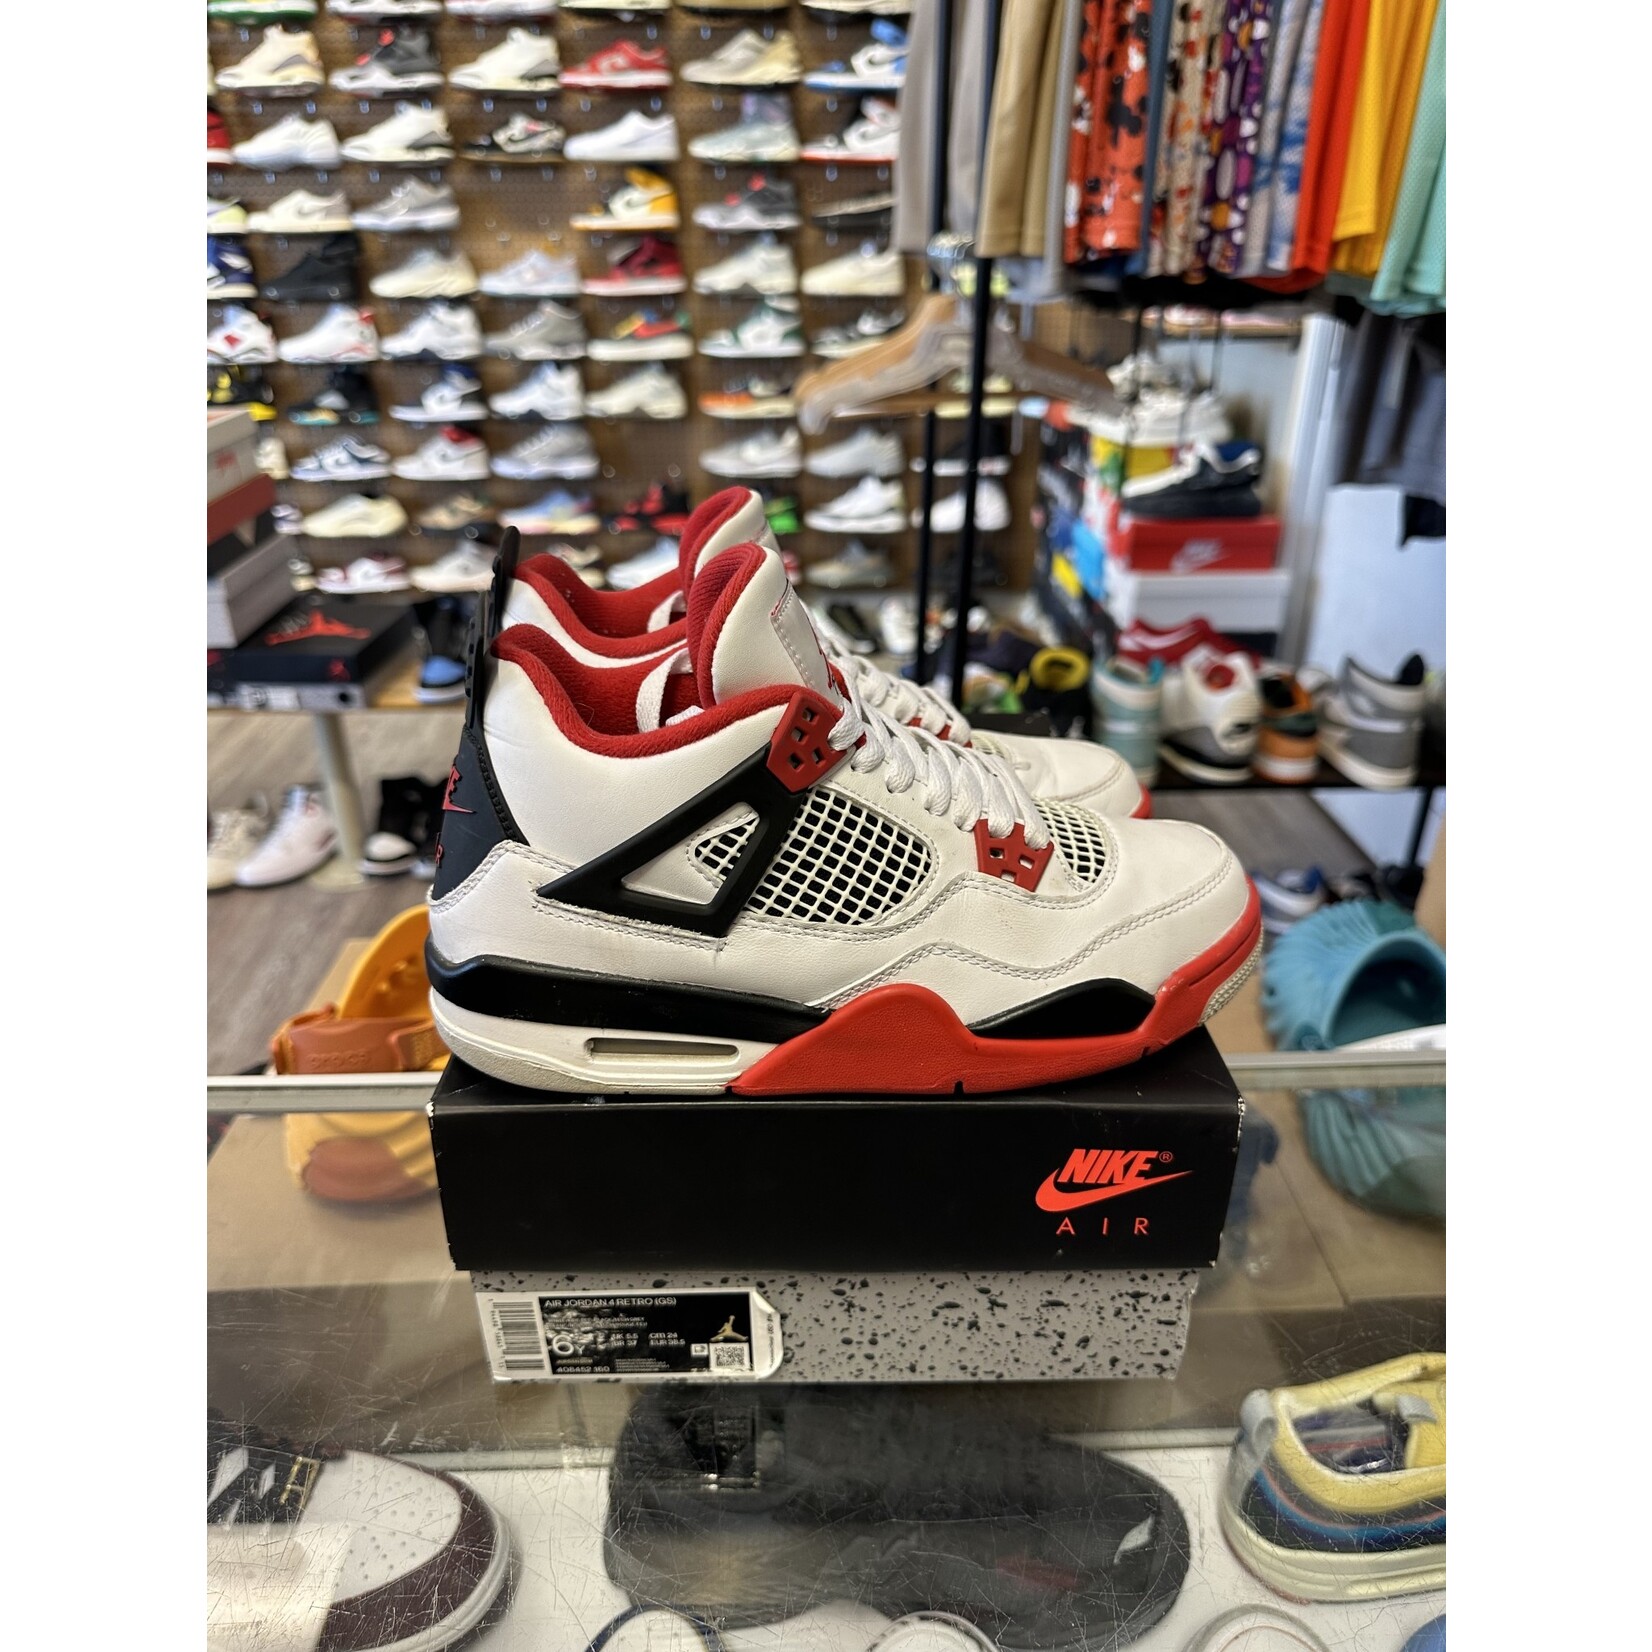 Jordan Jordan 4 Retro Fire Red (2020) (GS) Size 6, PREOWNED